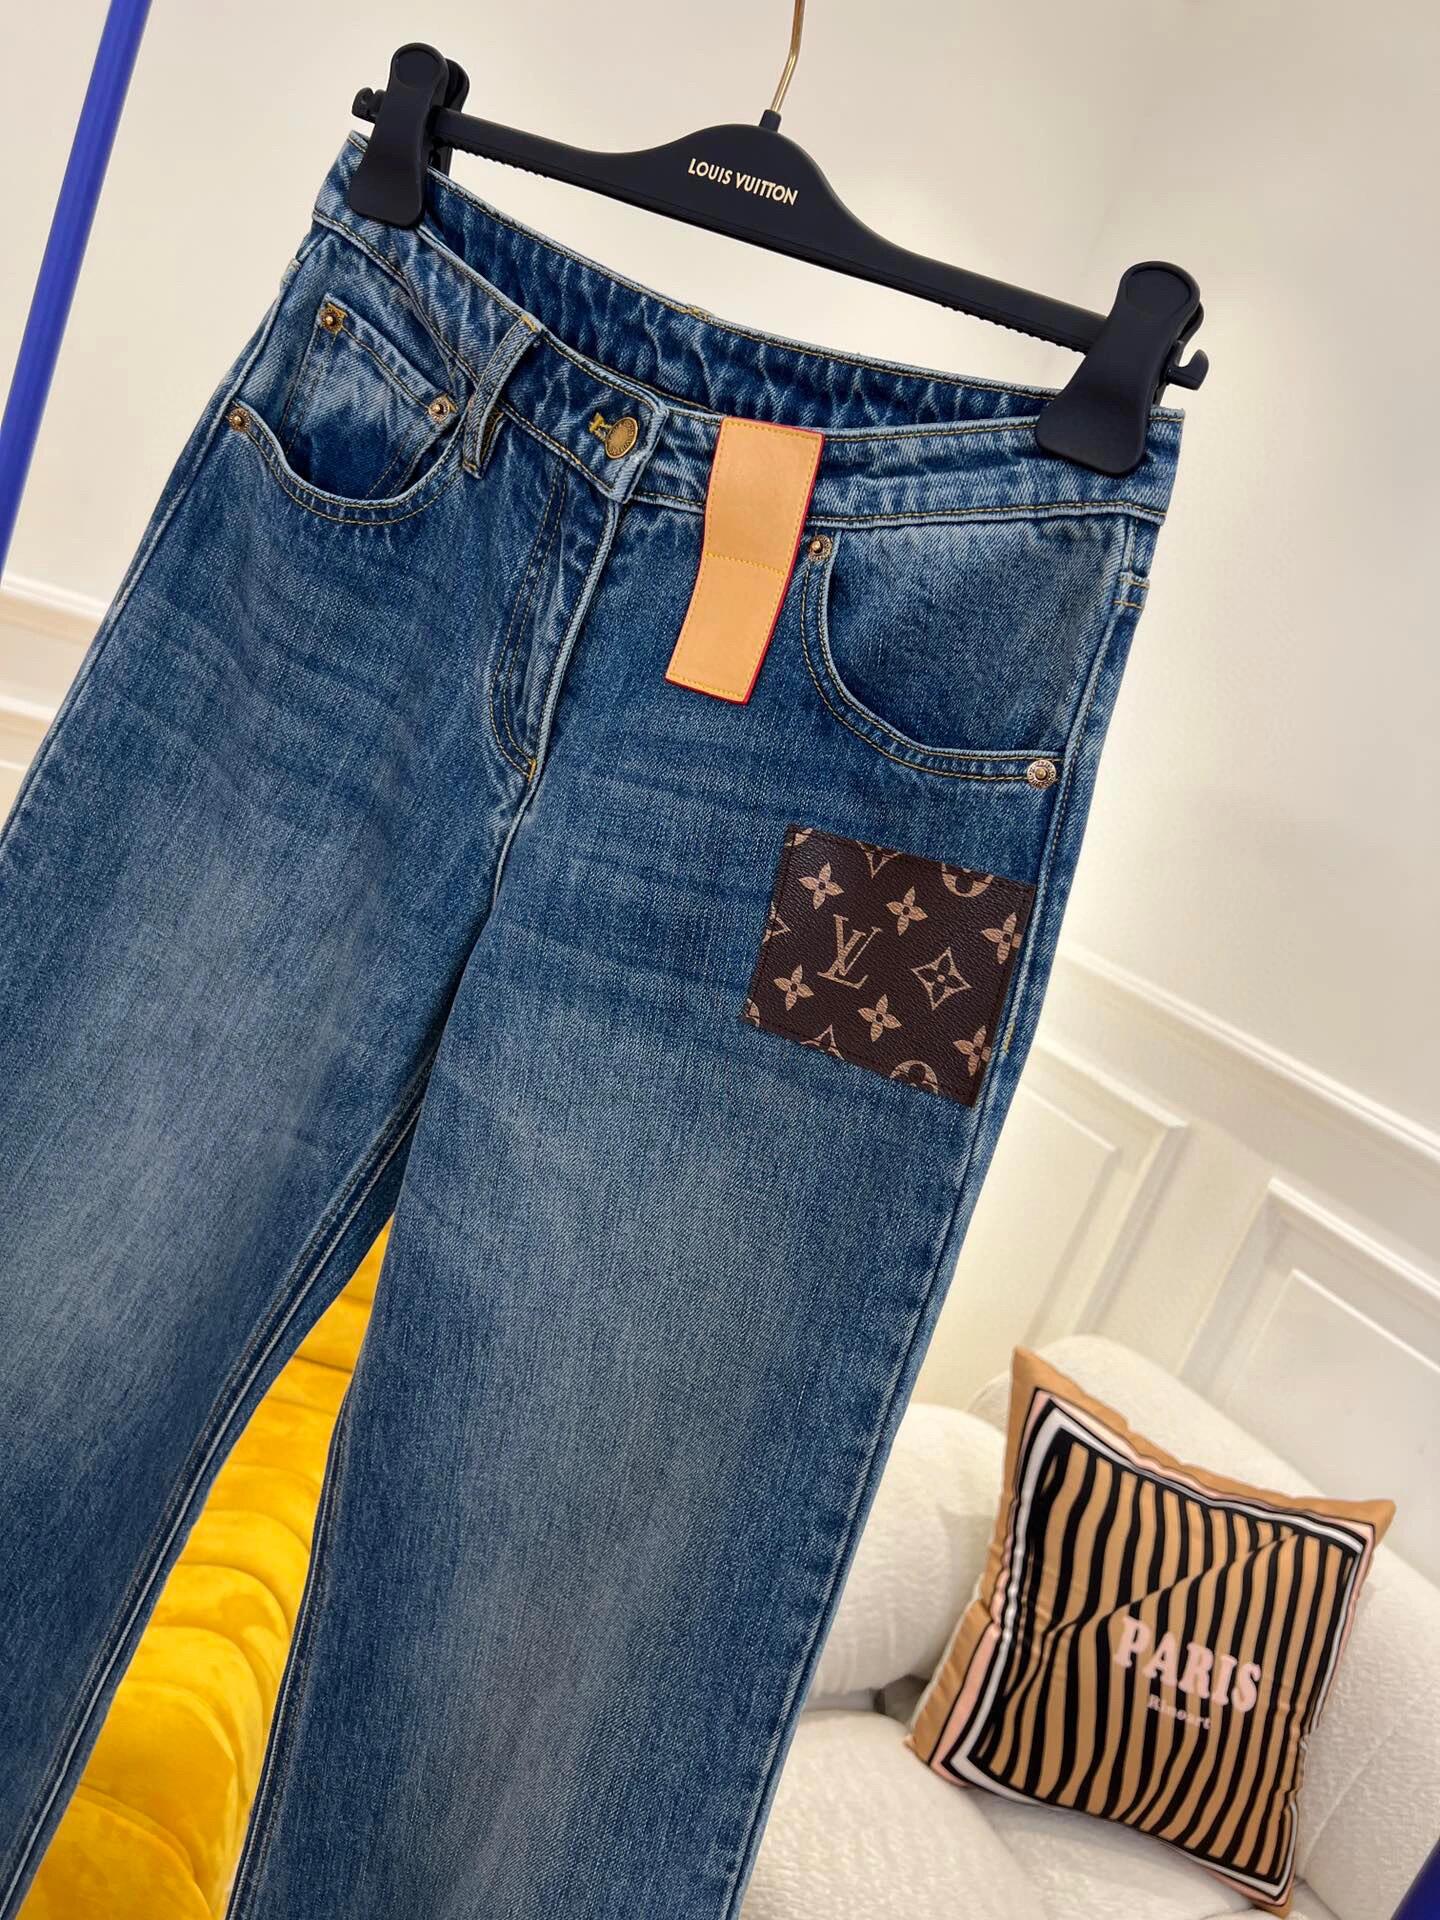 Pocket print jeans